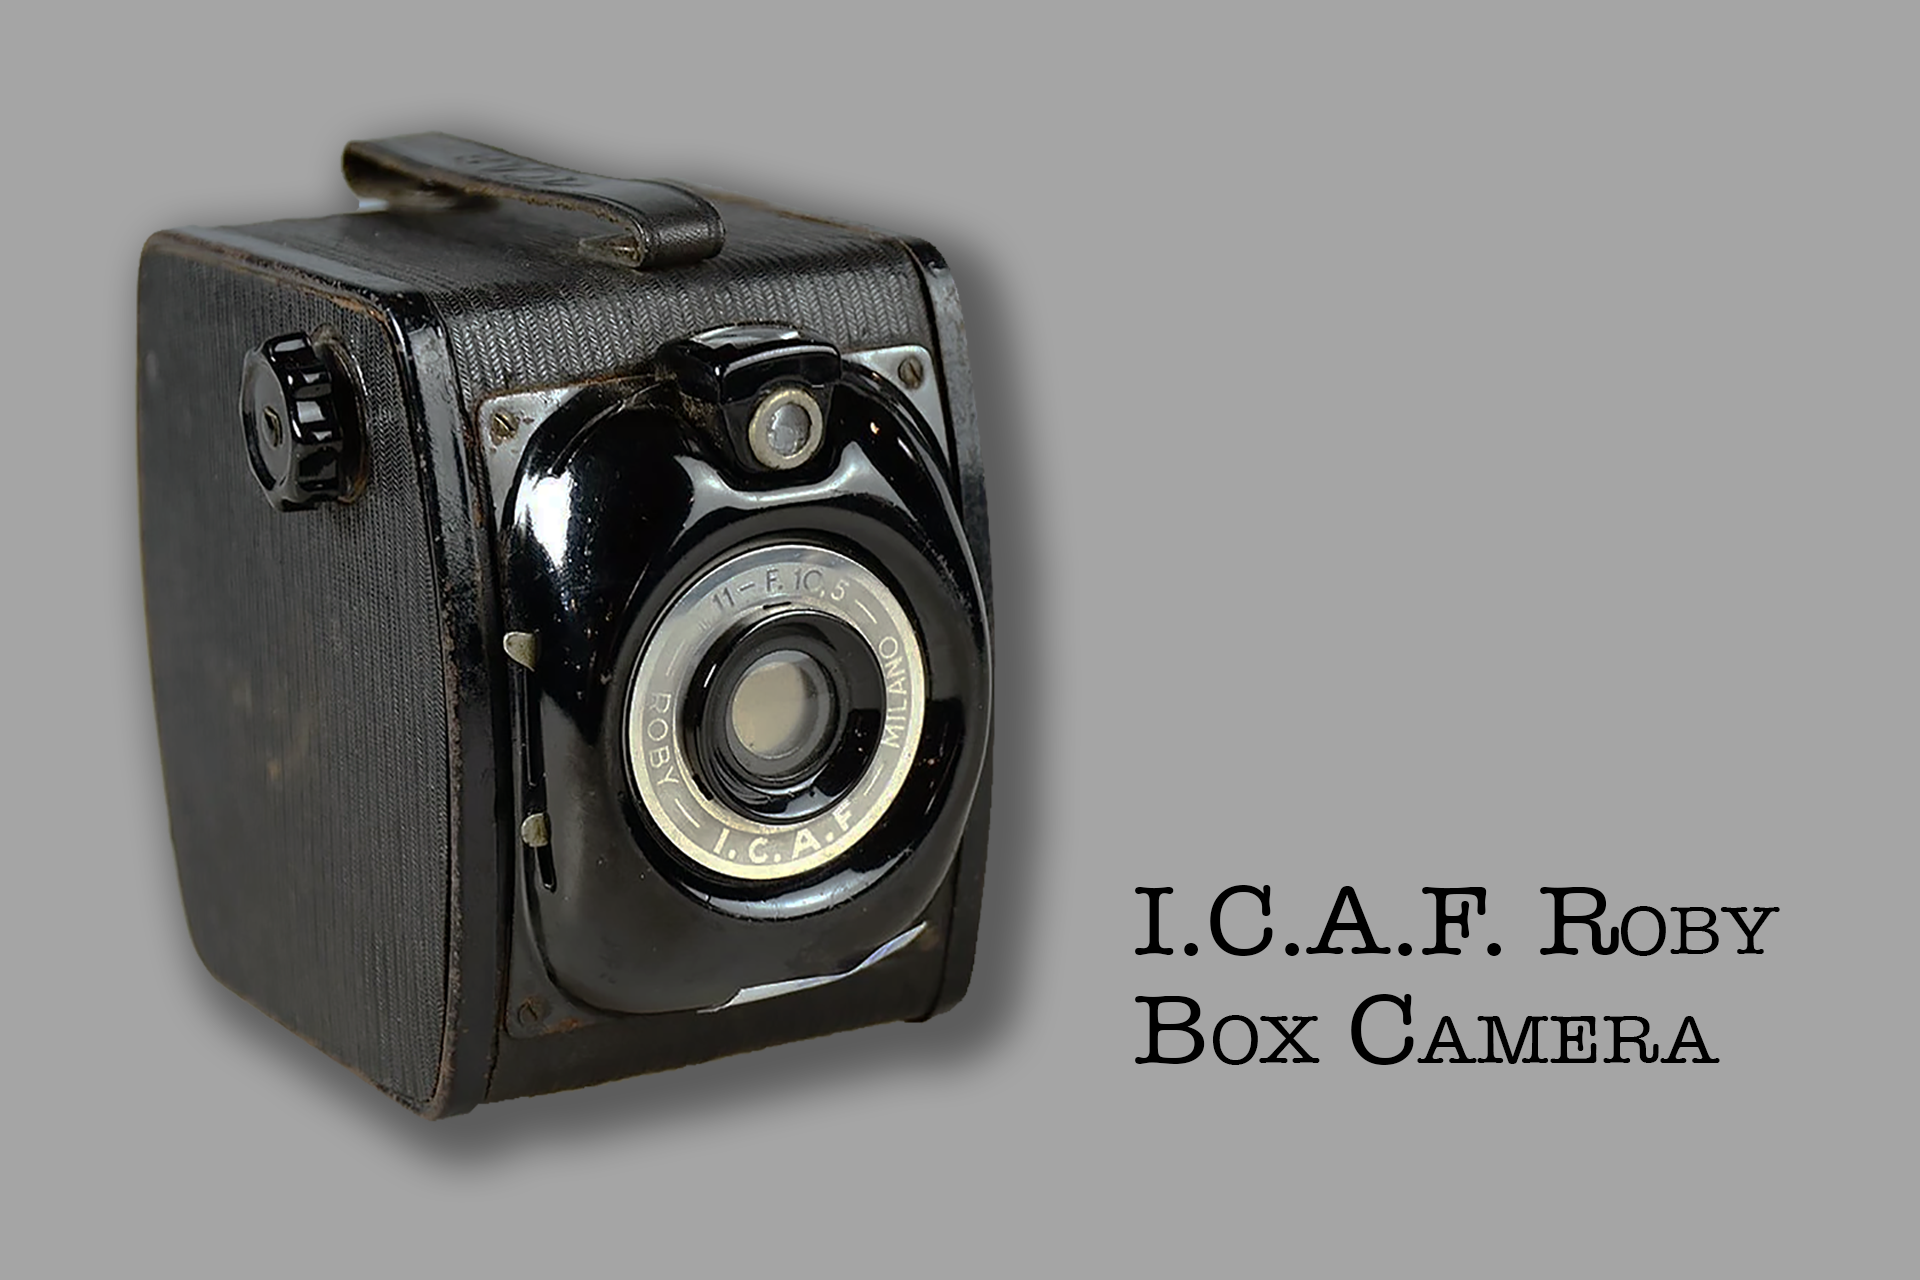 1920x1280px-Roby-Box-camera-vWA24